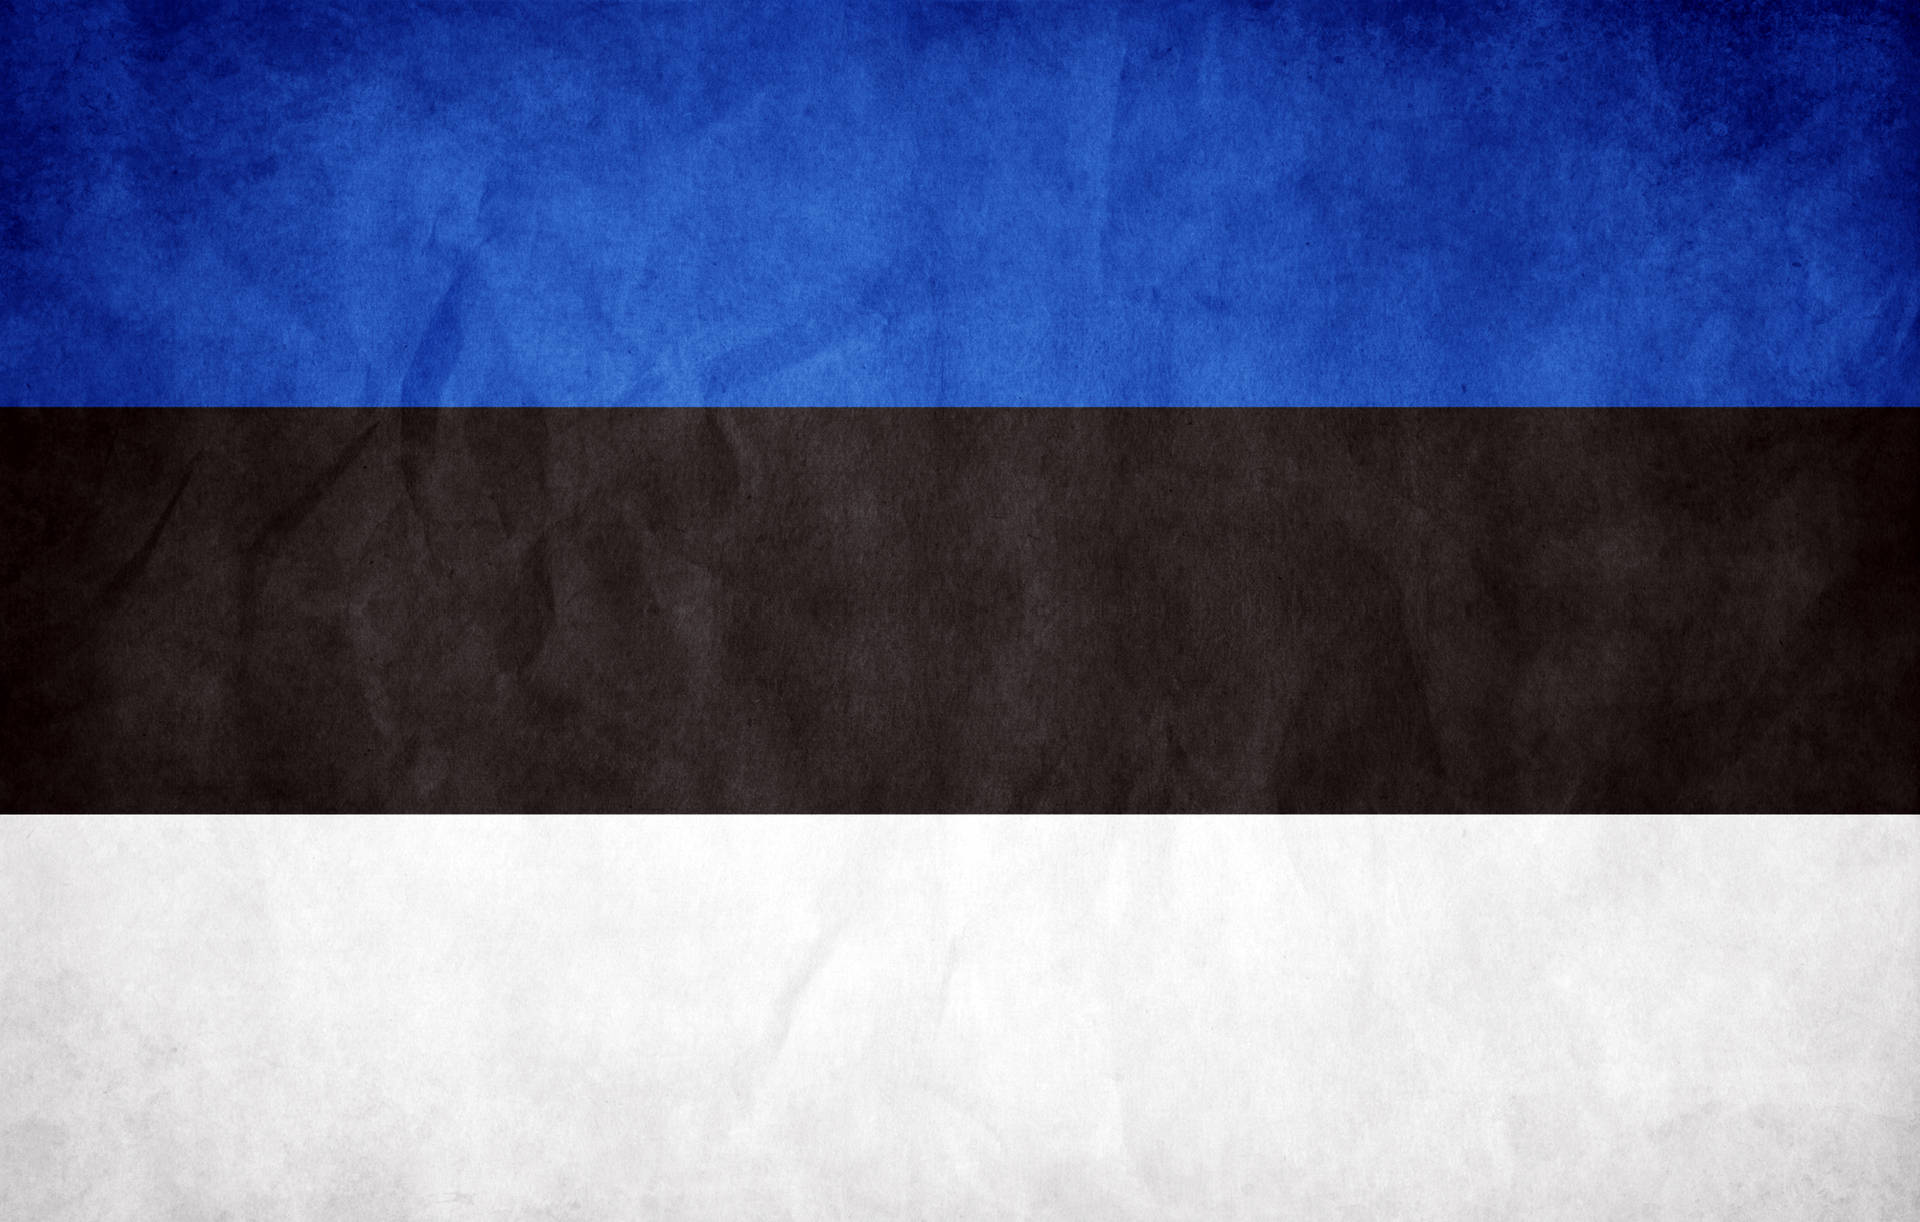 Estlandspappersflagga. Wallpaper